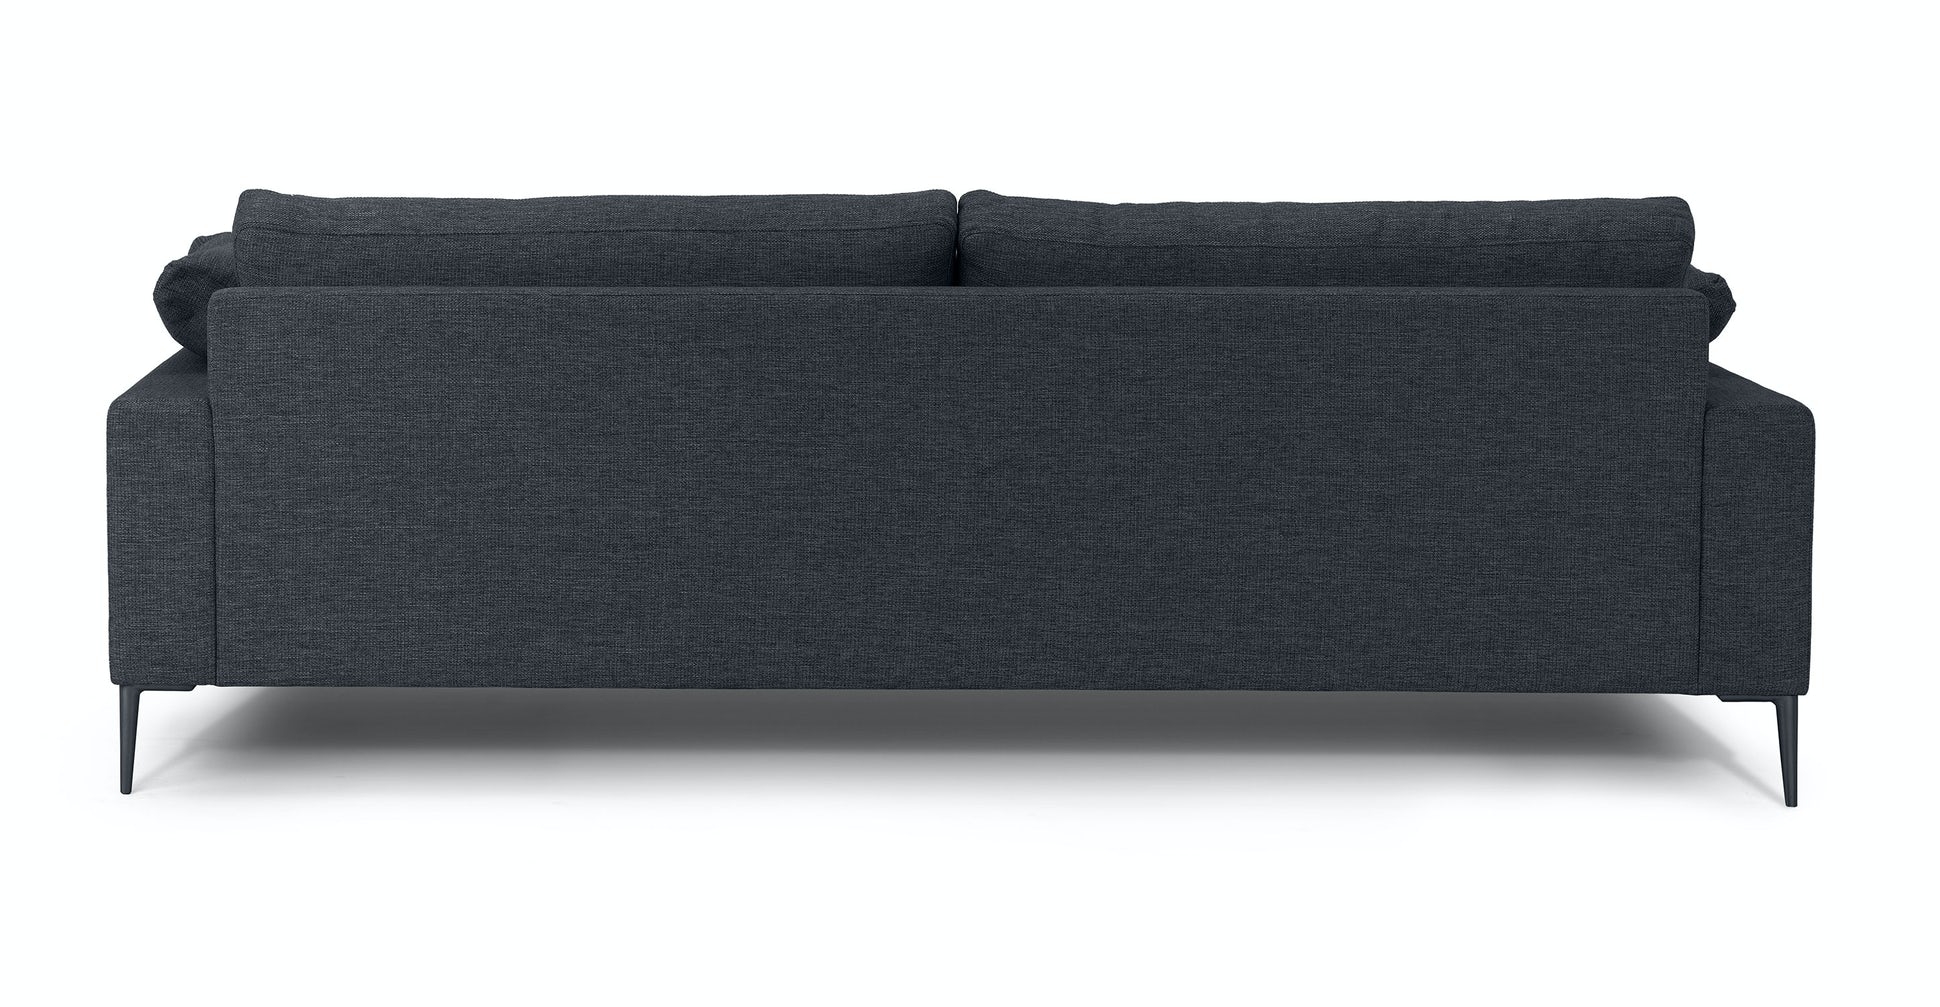 Nova Bard Gray Sofa, Black Legs - Image 2